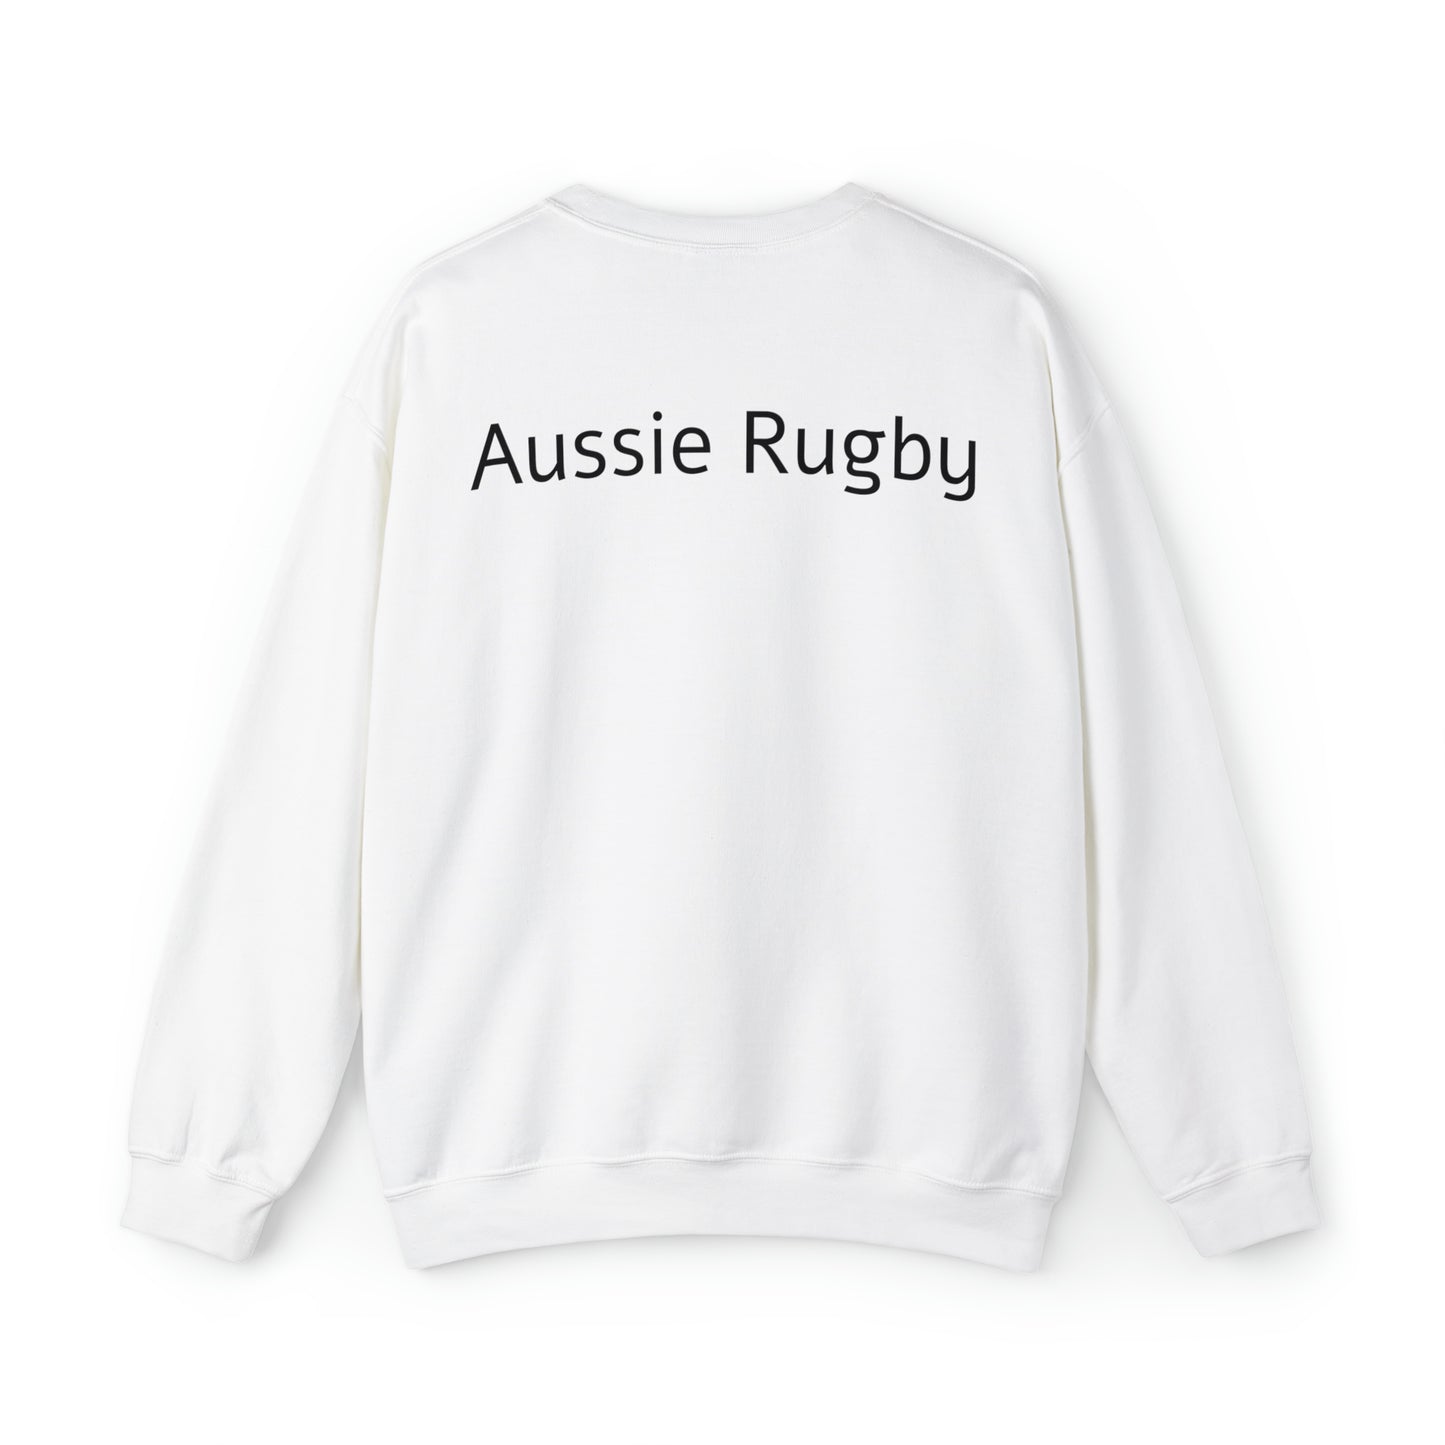 Australia celebrating with RWC - light sweatshirts